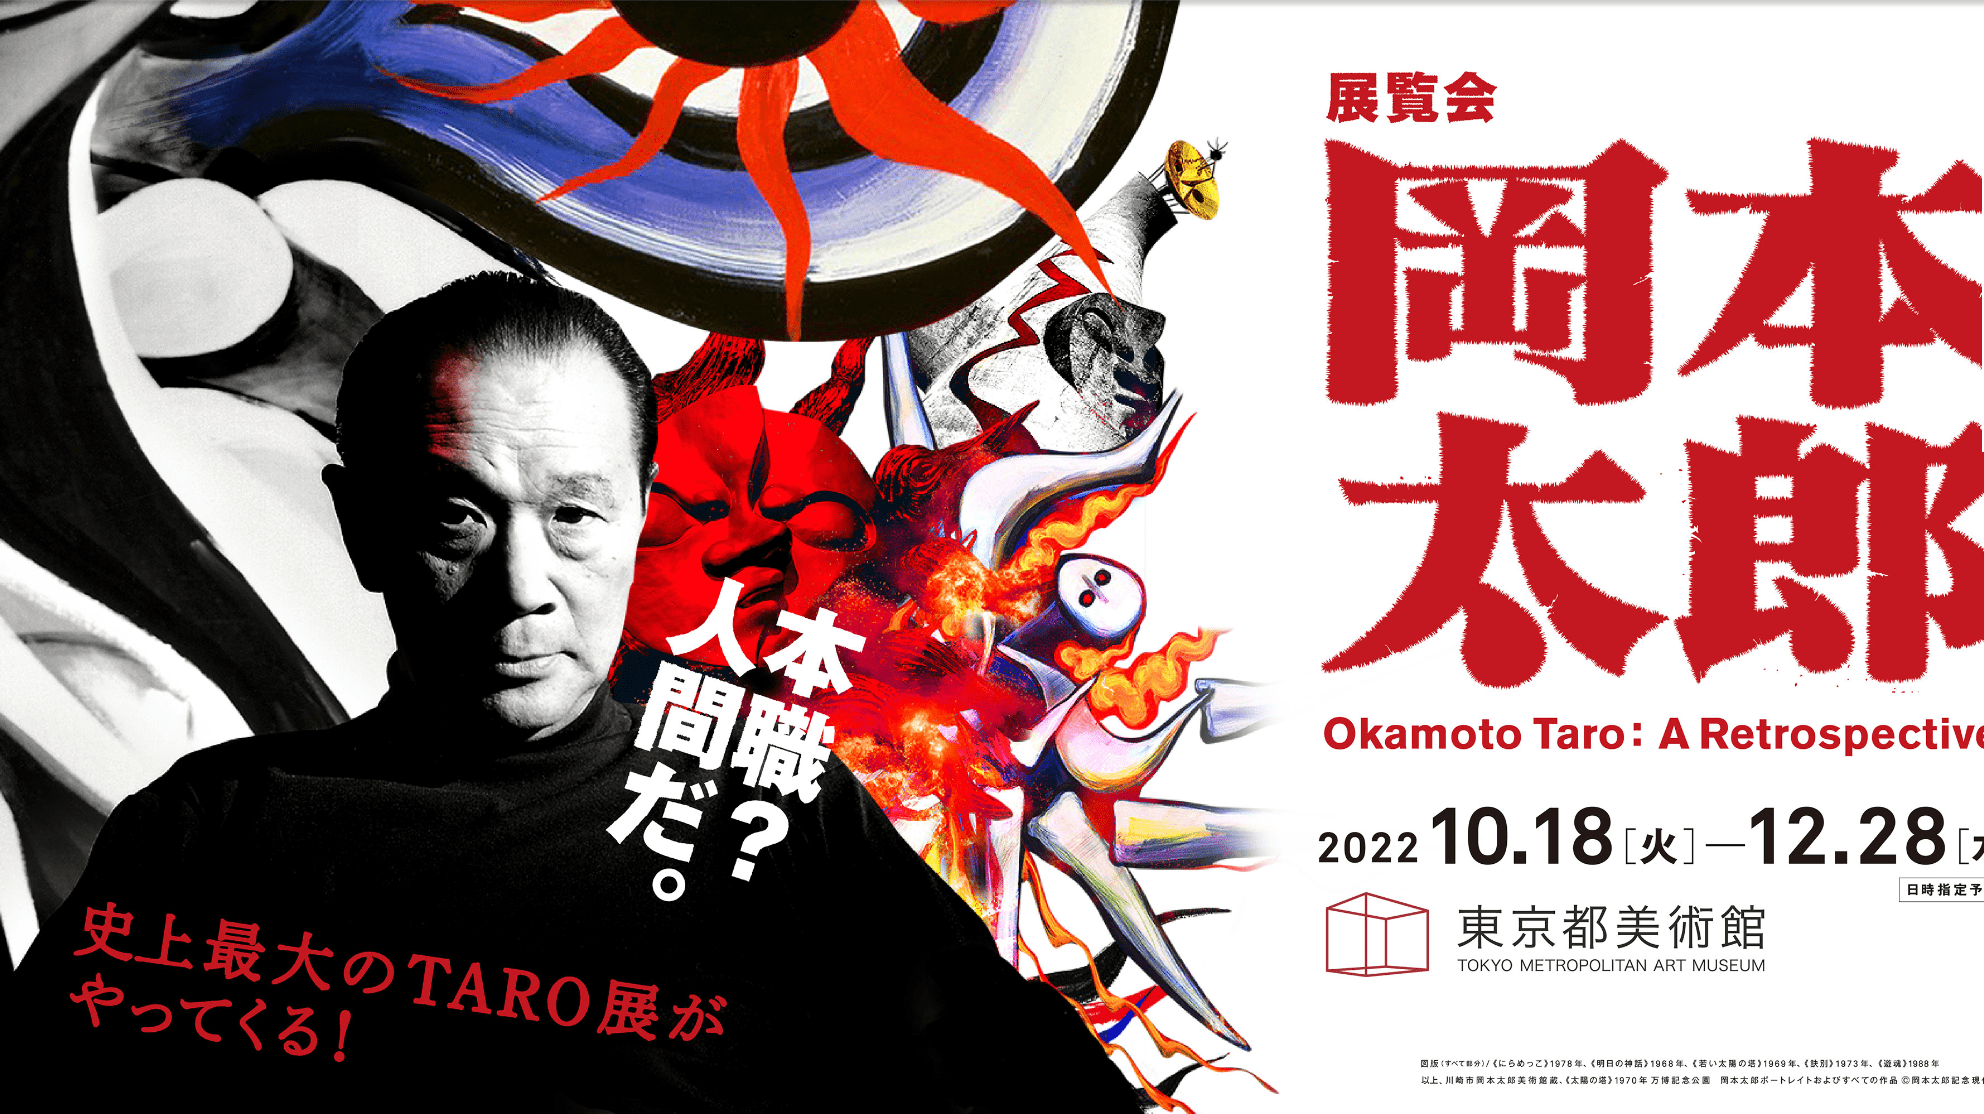 Okamoto Taro: A Retrospective